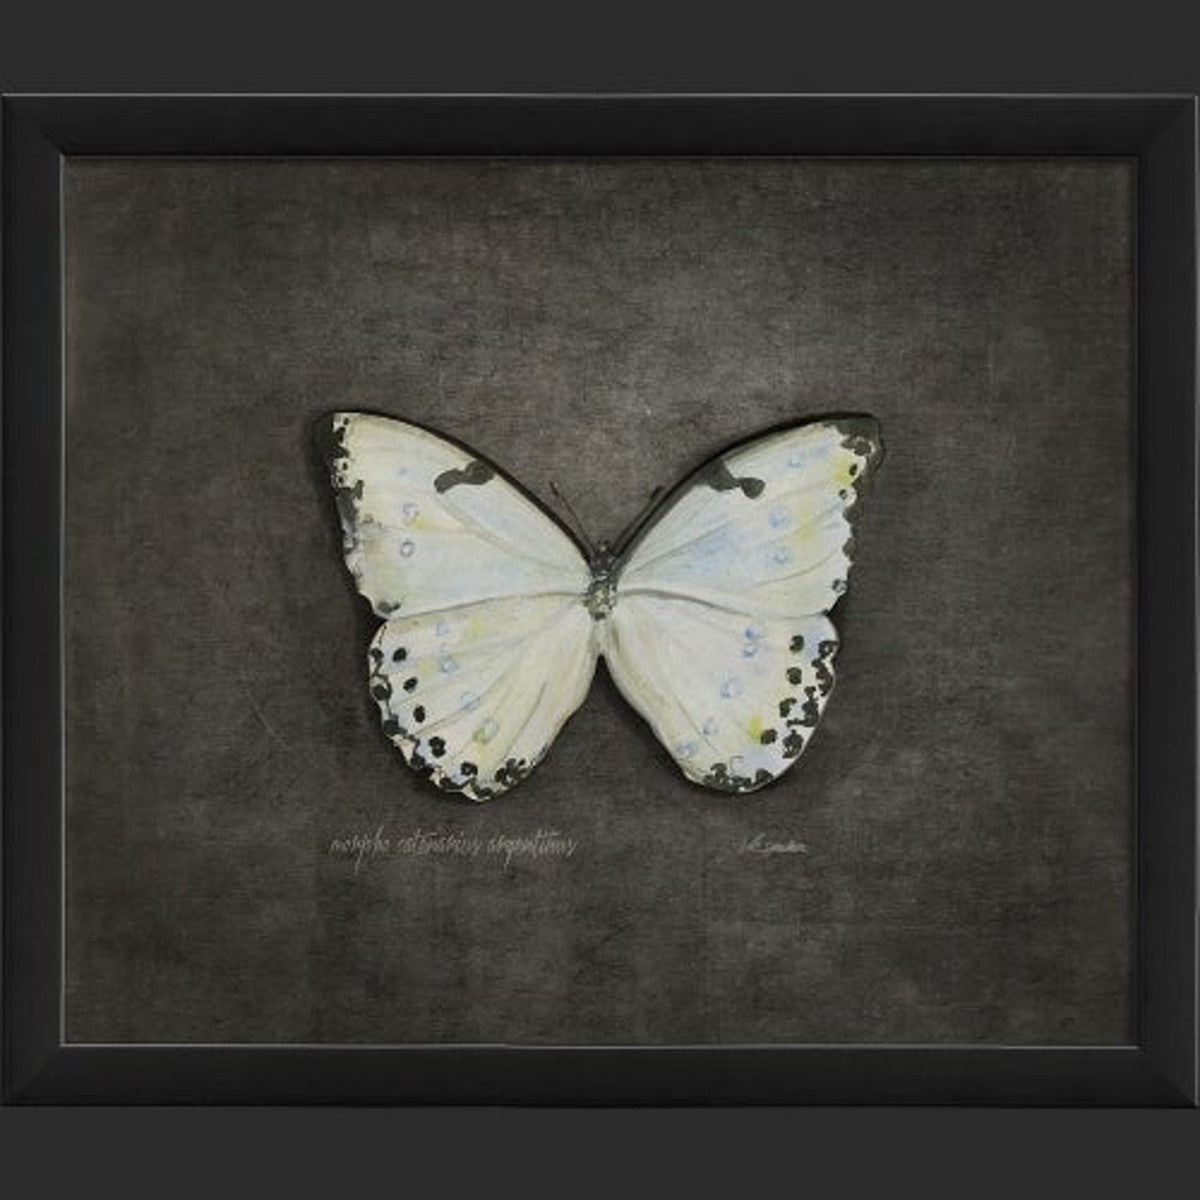 Framed Butterfly Print - Morpho Catenarius Argentinus